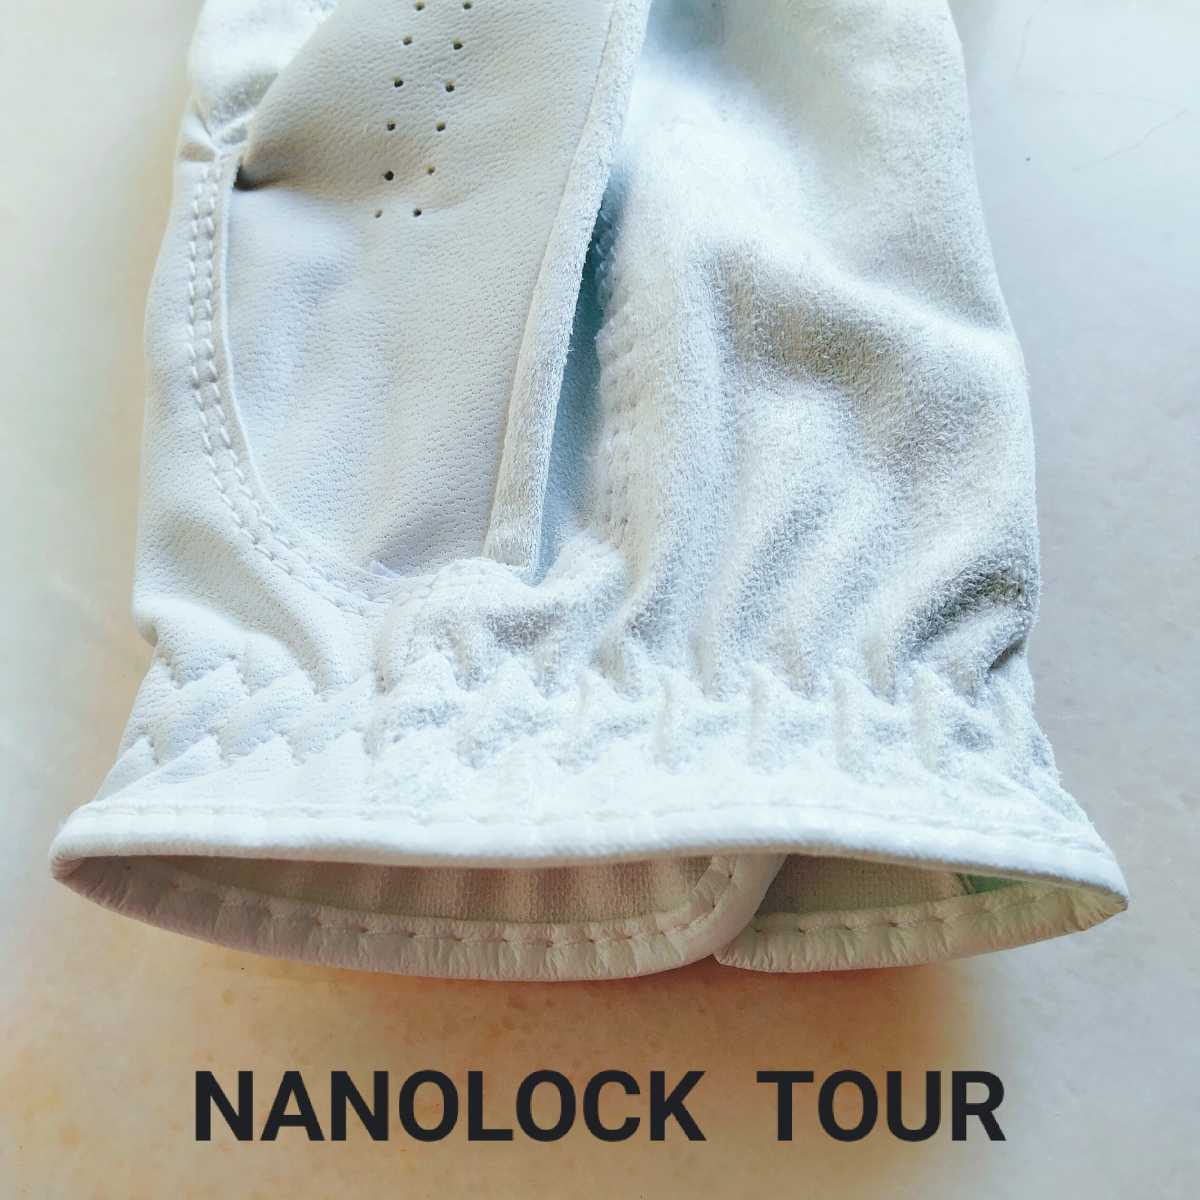 Fjナノロックツアー23cm白3枚セット フットジョイ ゴルフグローブ TOUR 新品未使用 匿名配送の画像5